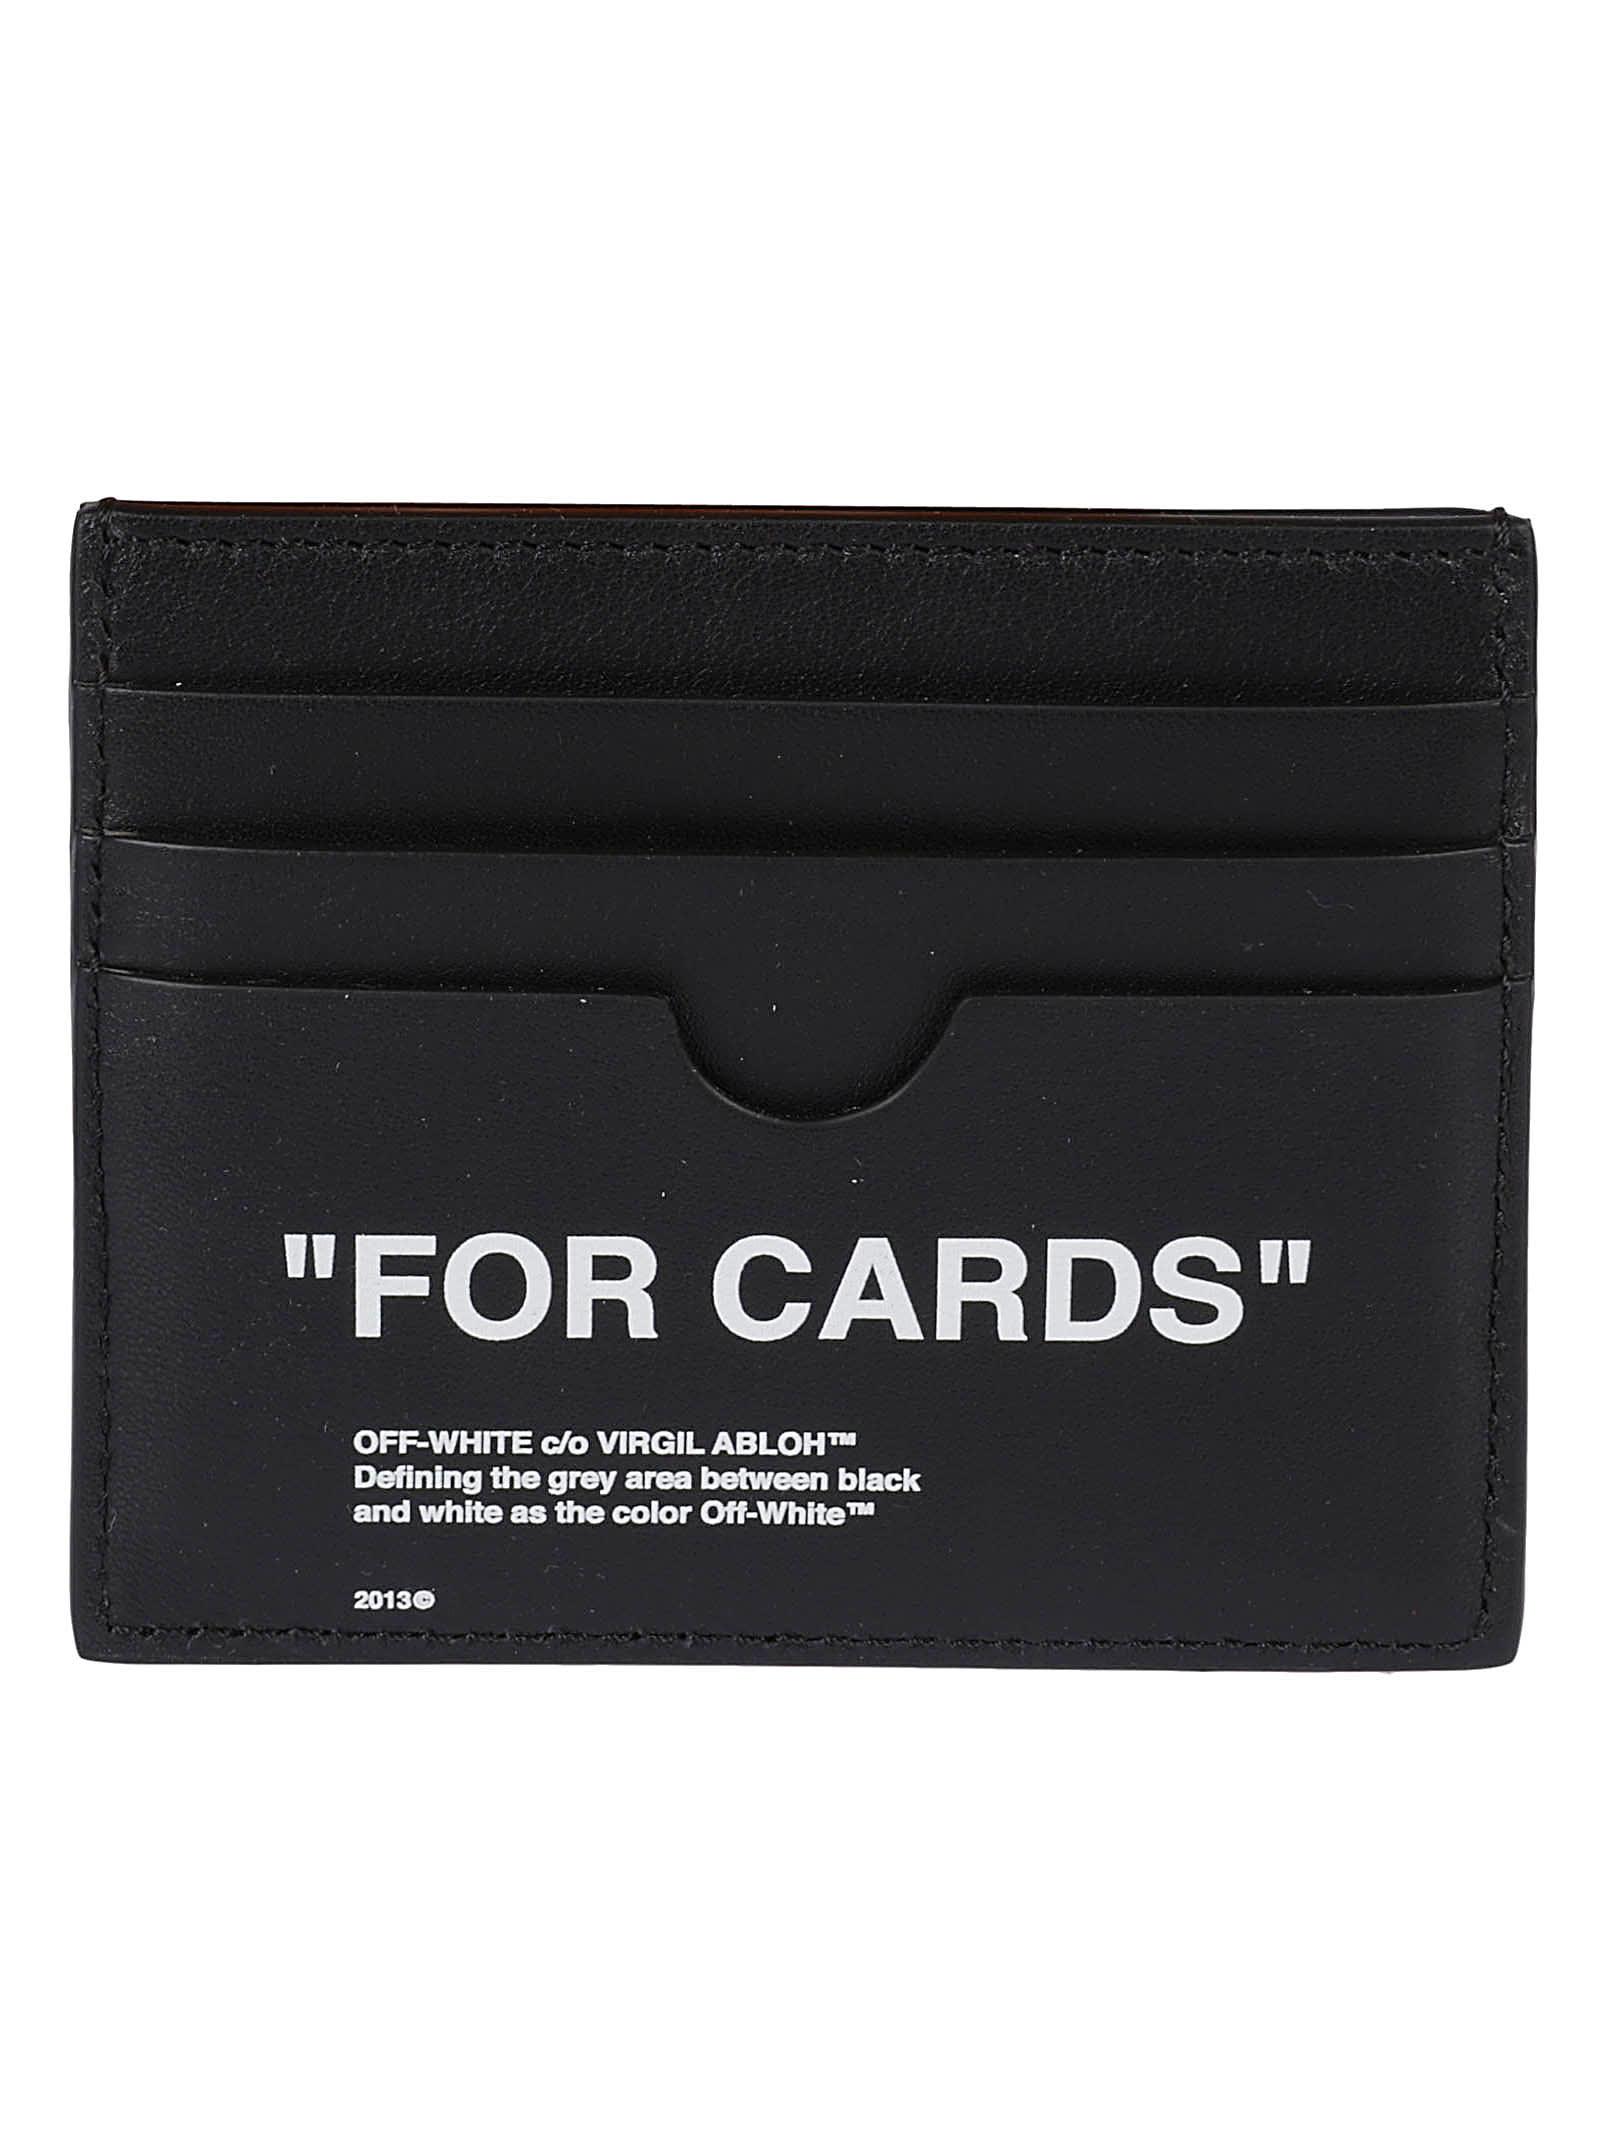 Off-White c/o Virgil Abloh Leather Card Holder in Black for